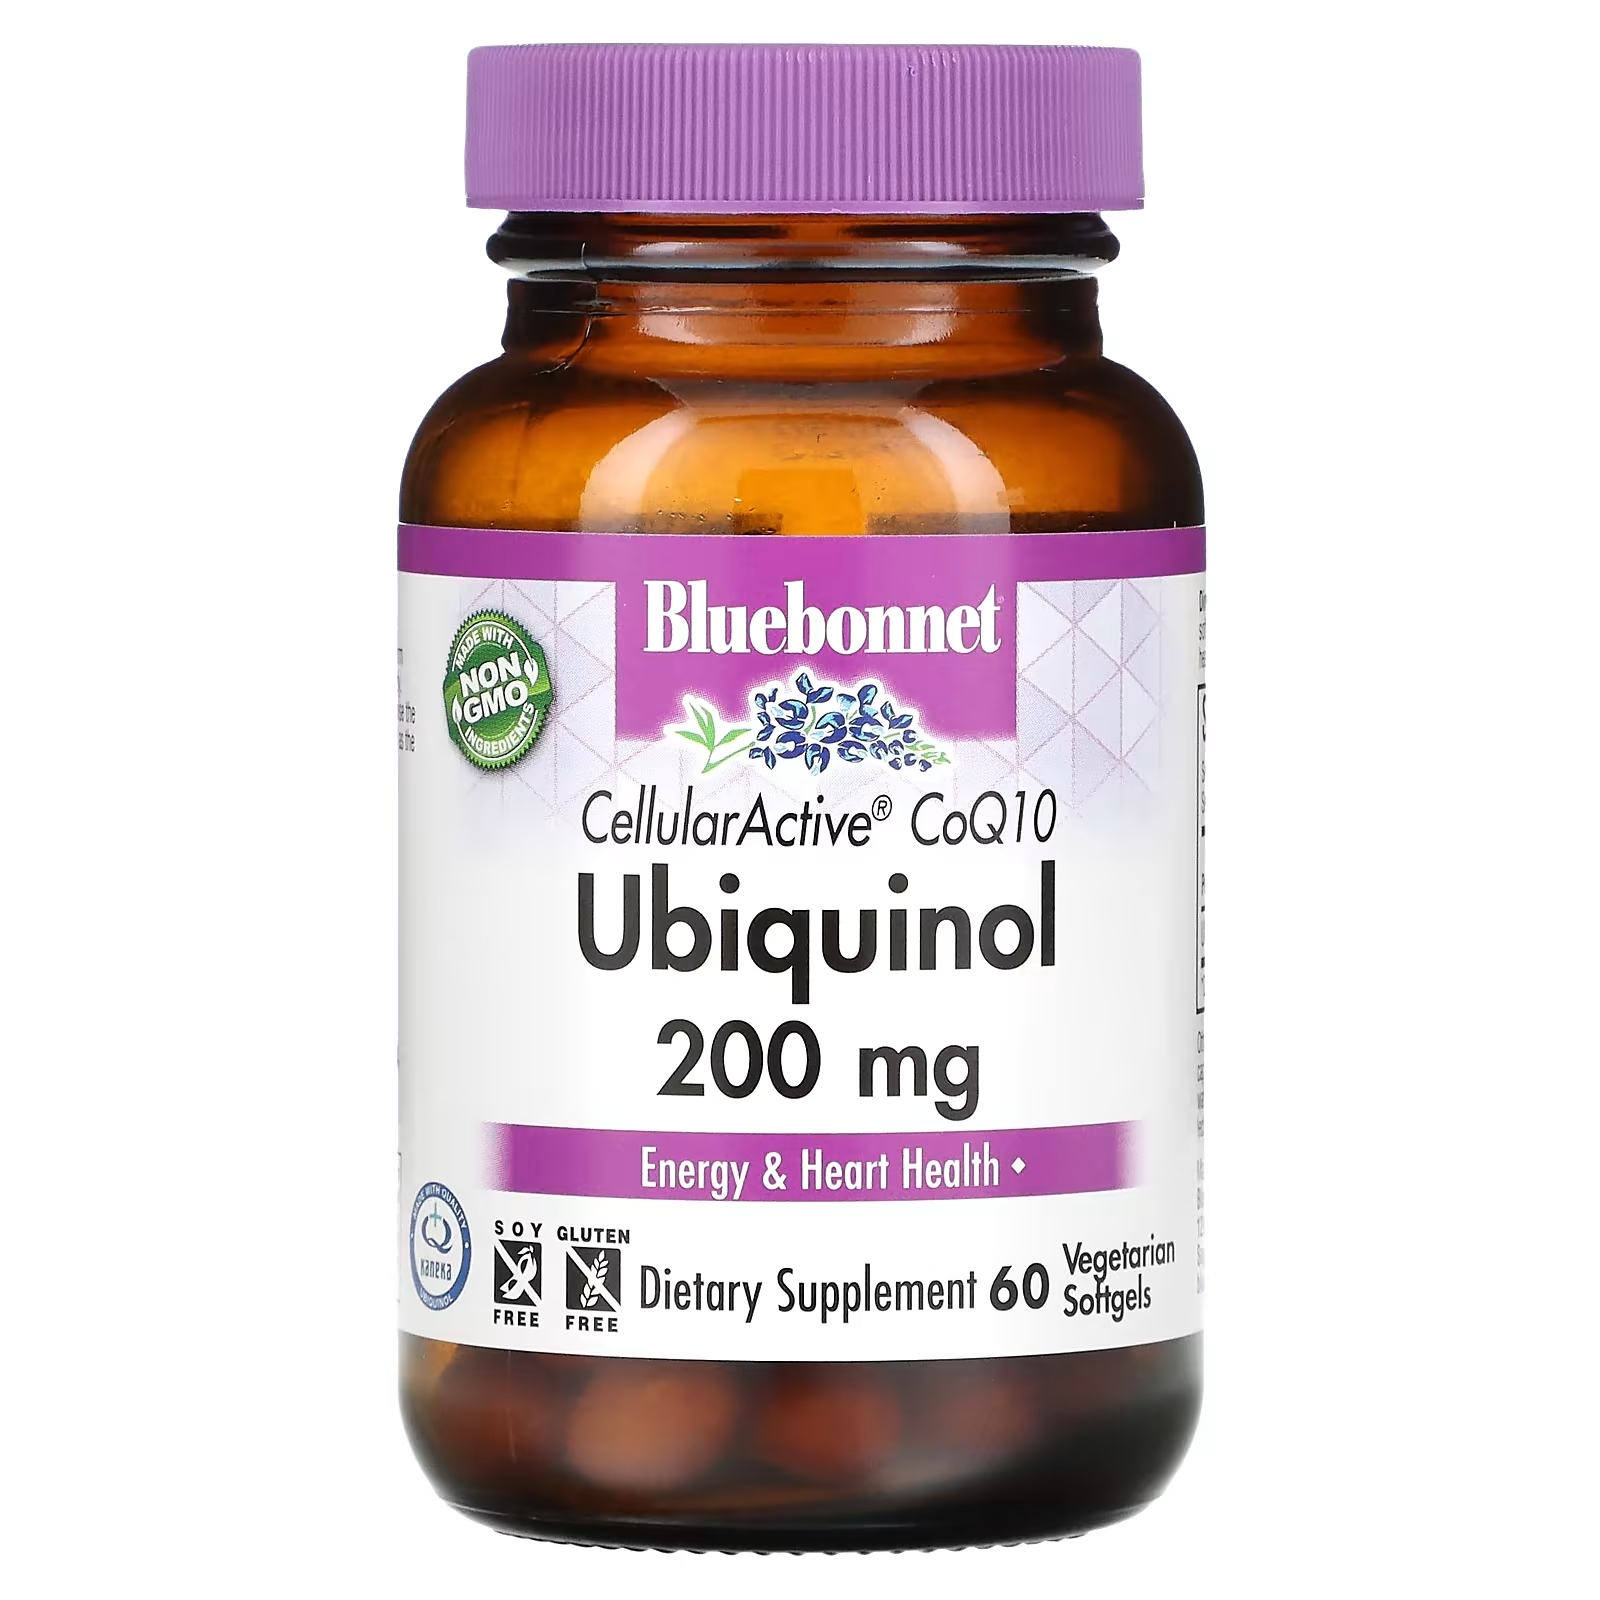 Bluebonnet Nutrition Убихинол CellullarActive CoQ10 200 мг, 60 растительных капсул coq10 убихинол cellularactive 100 мг 60 капсул bluebonnet nutrition